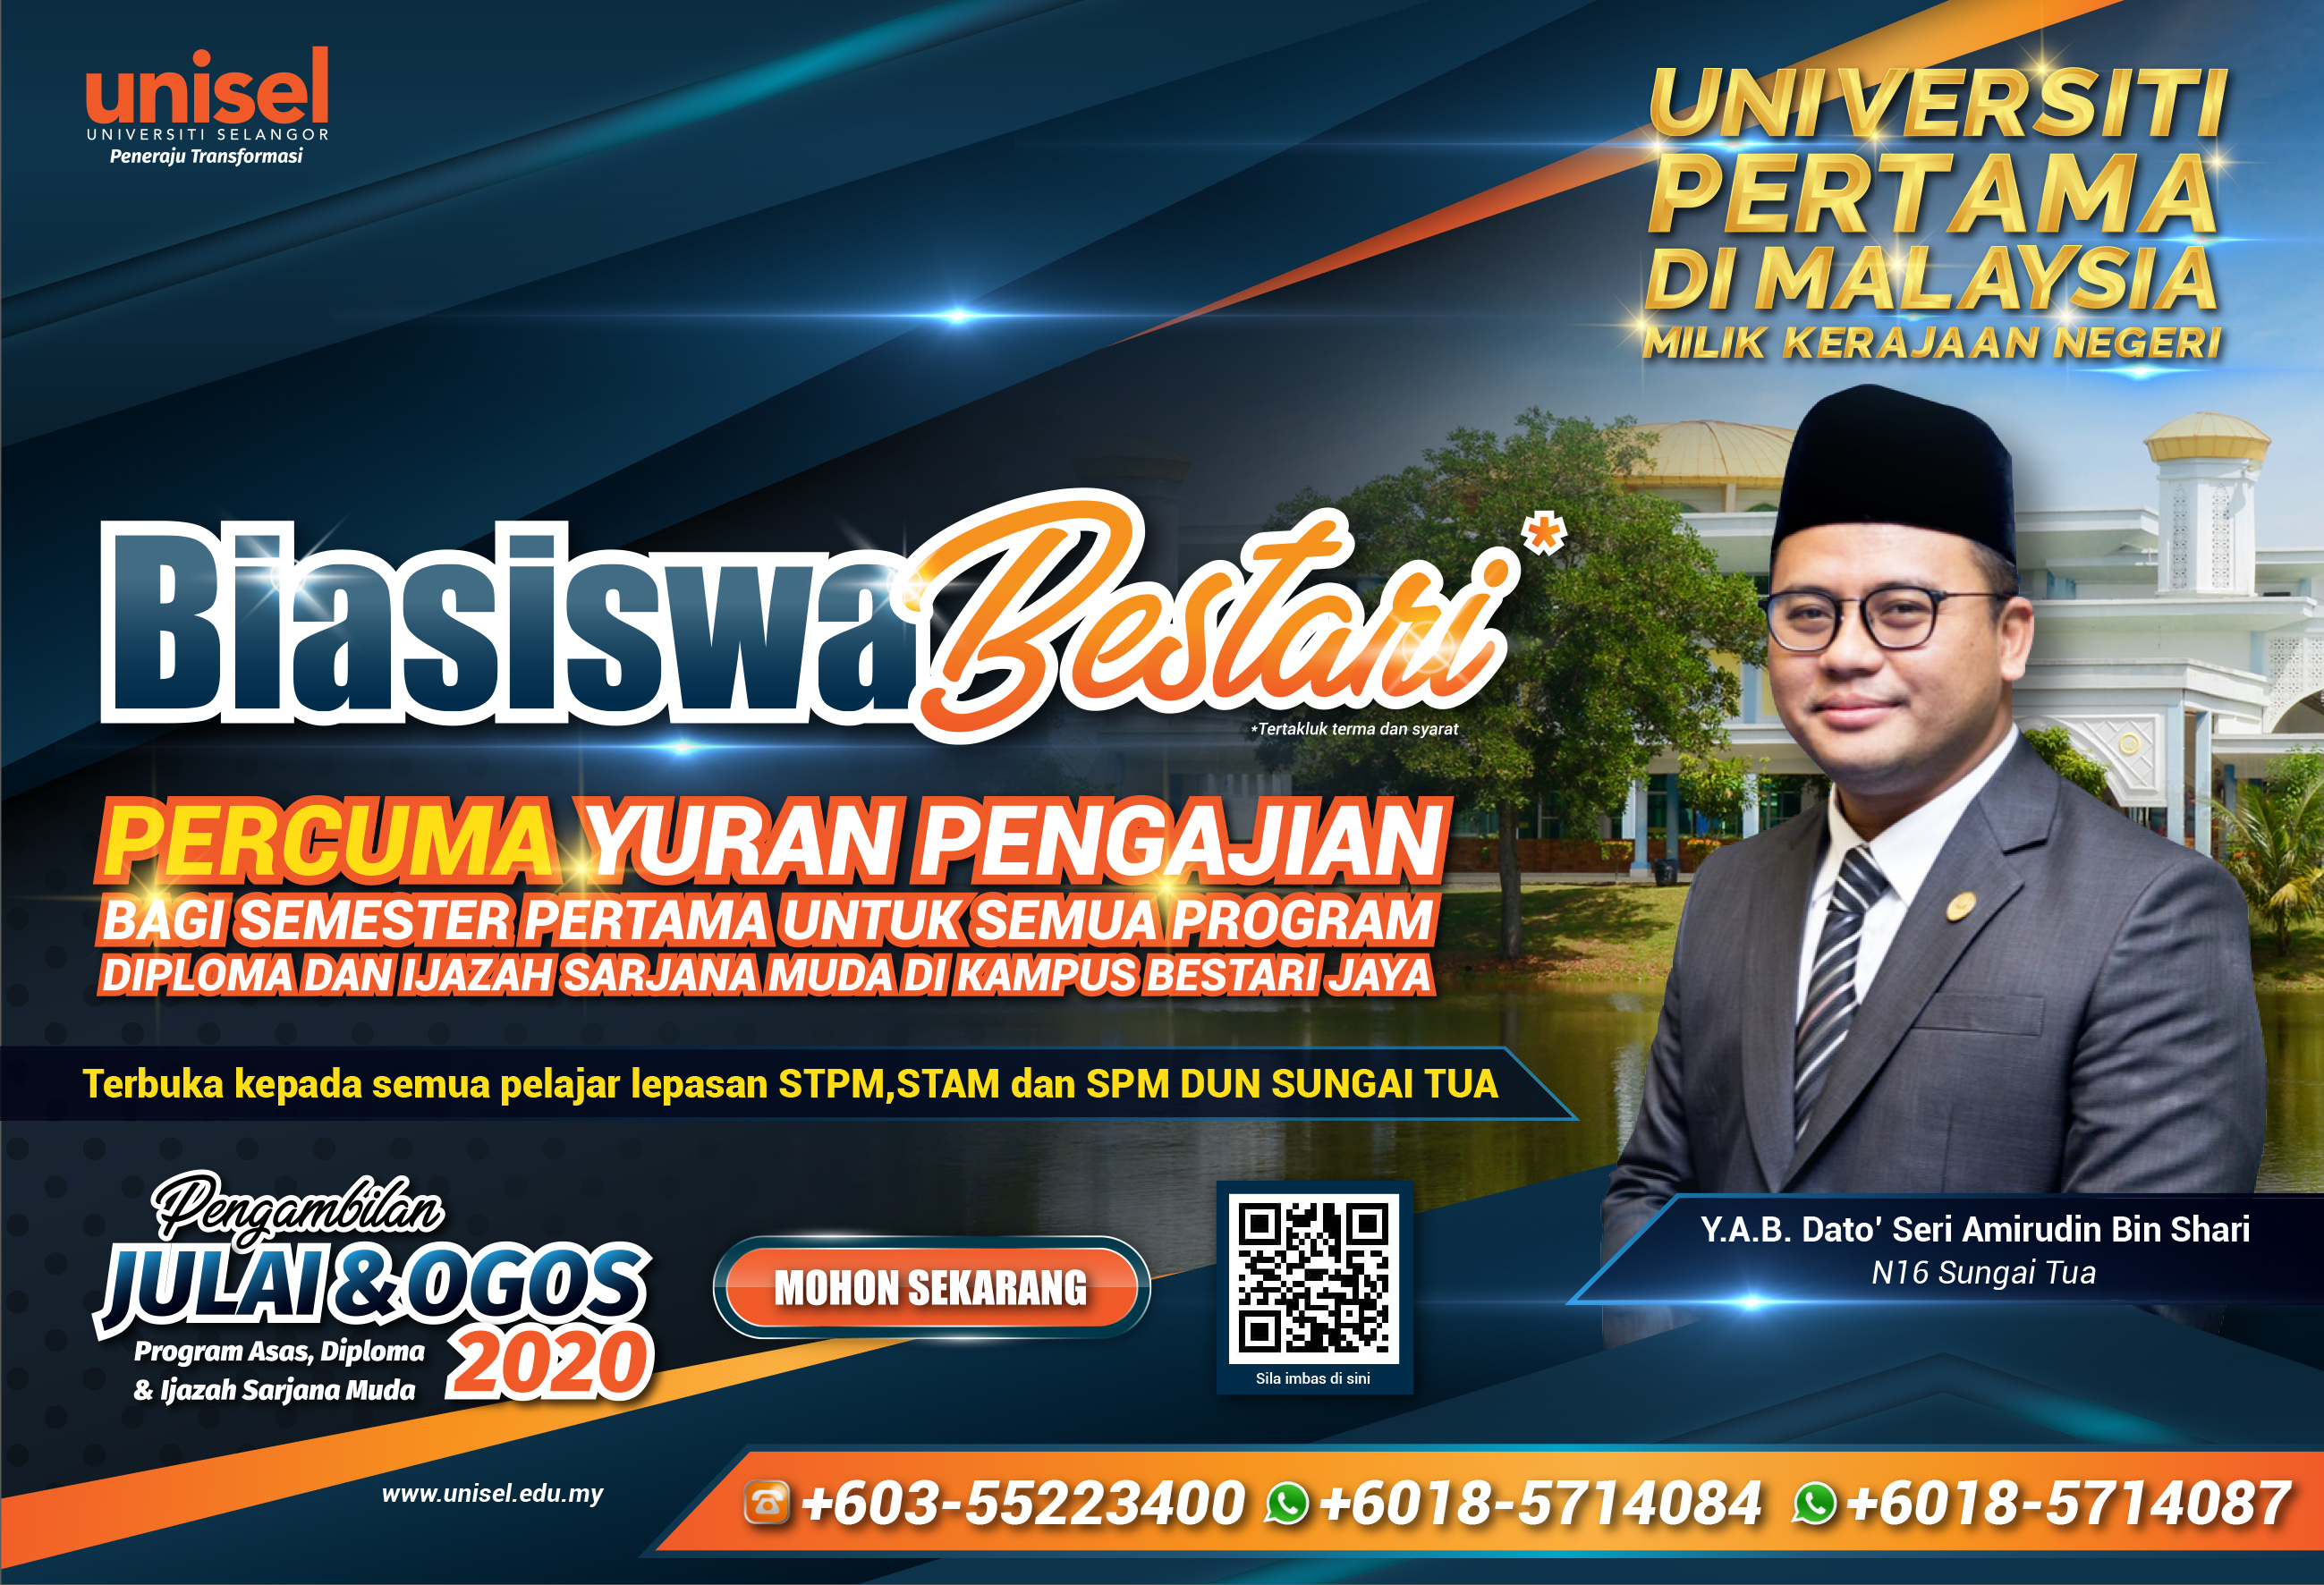 Programmes Offered Unisel Universiti Selangor